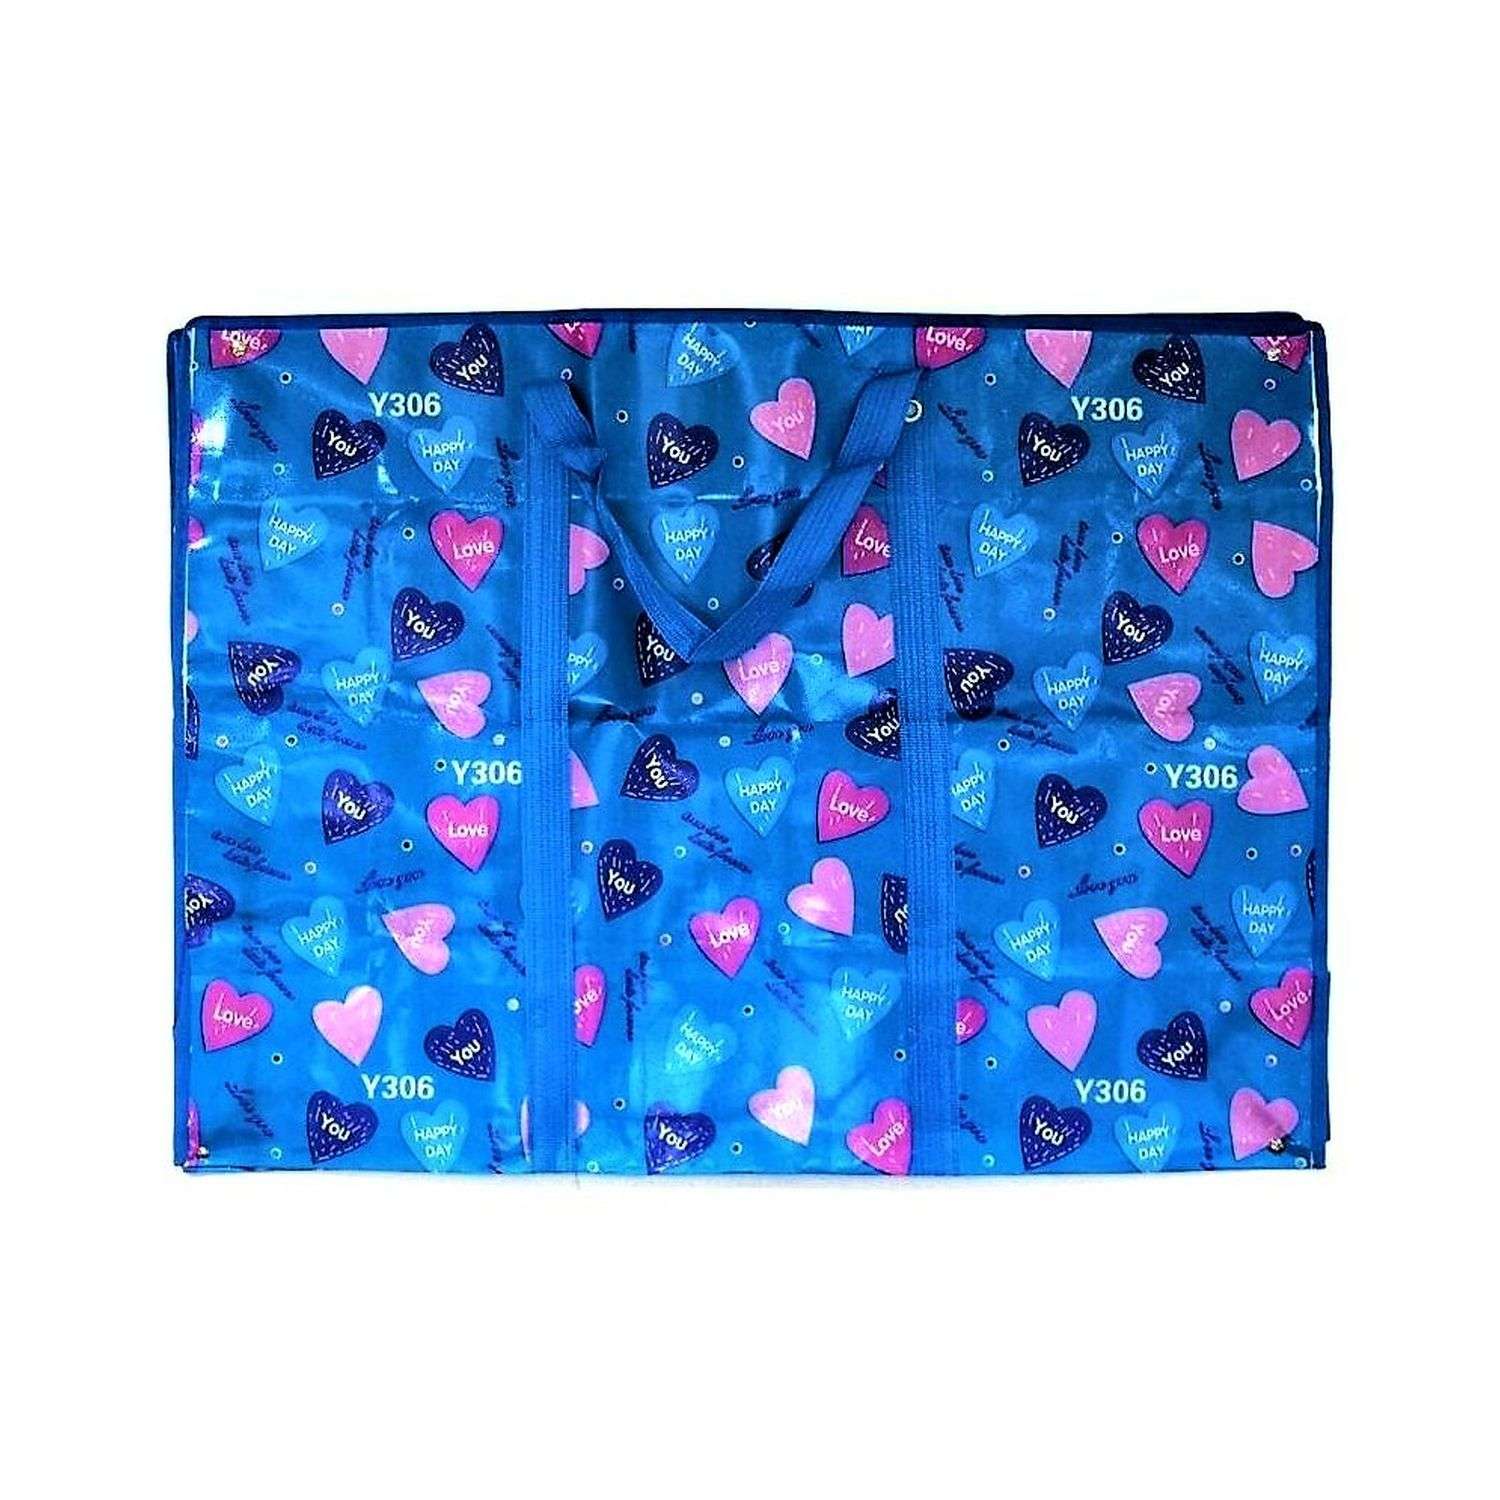 Хозяйственная сумка Ripoma двухслойная на молнии голубая с сердечками - фото 1